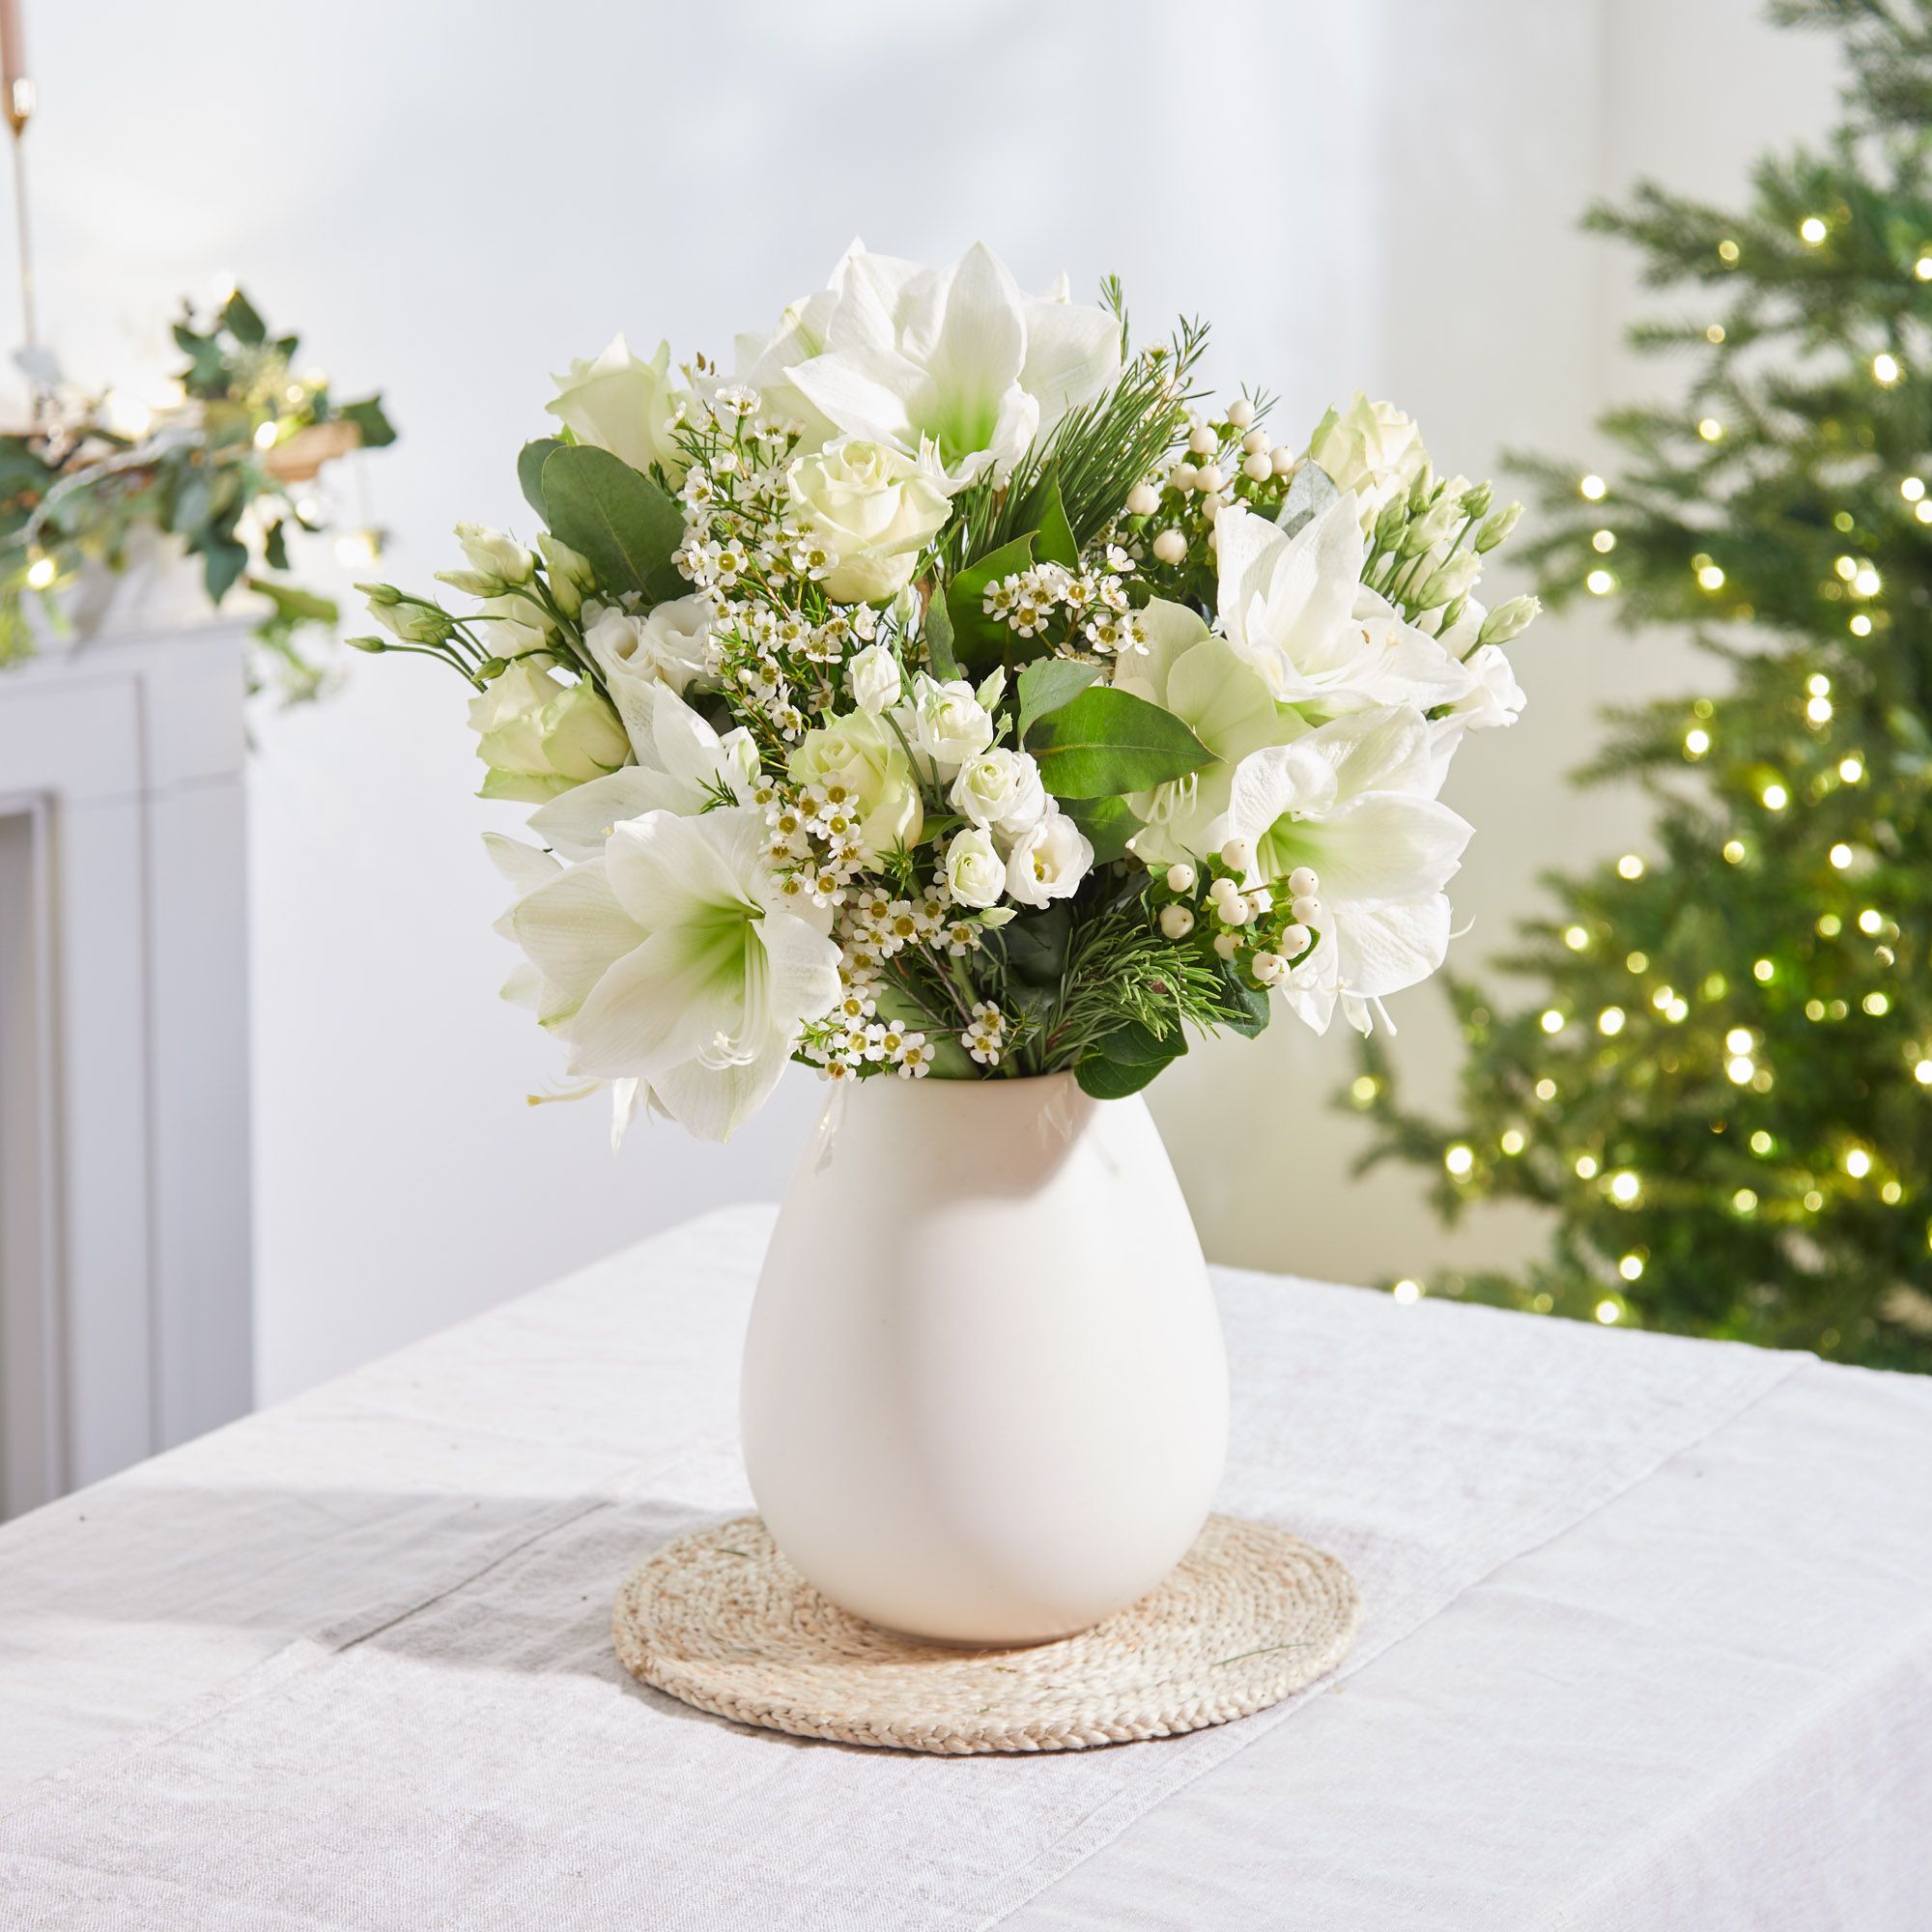 Send the Celestia festive bouquet | Arena Flowers